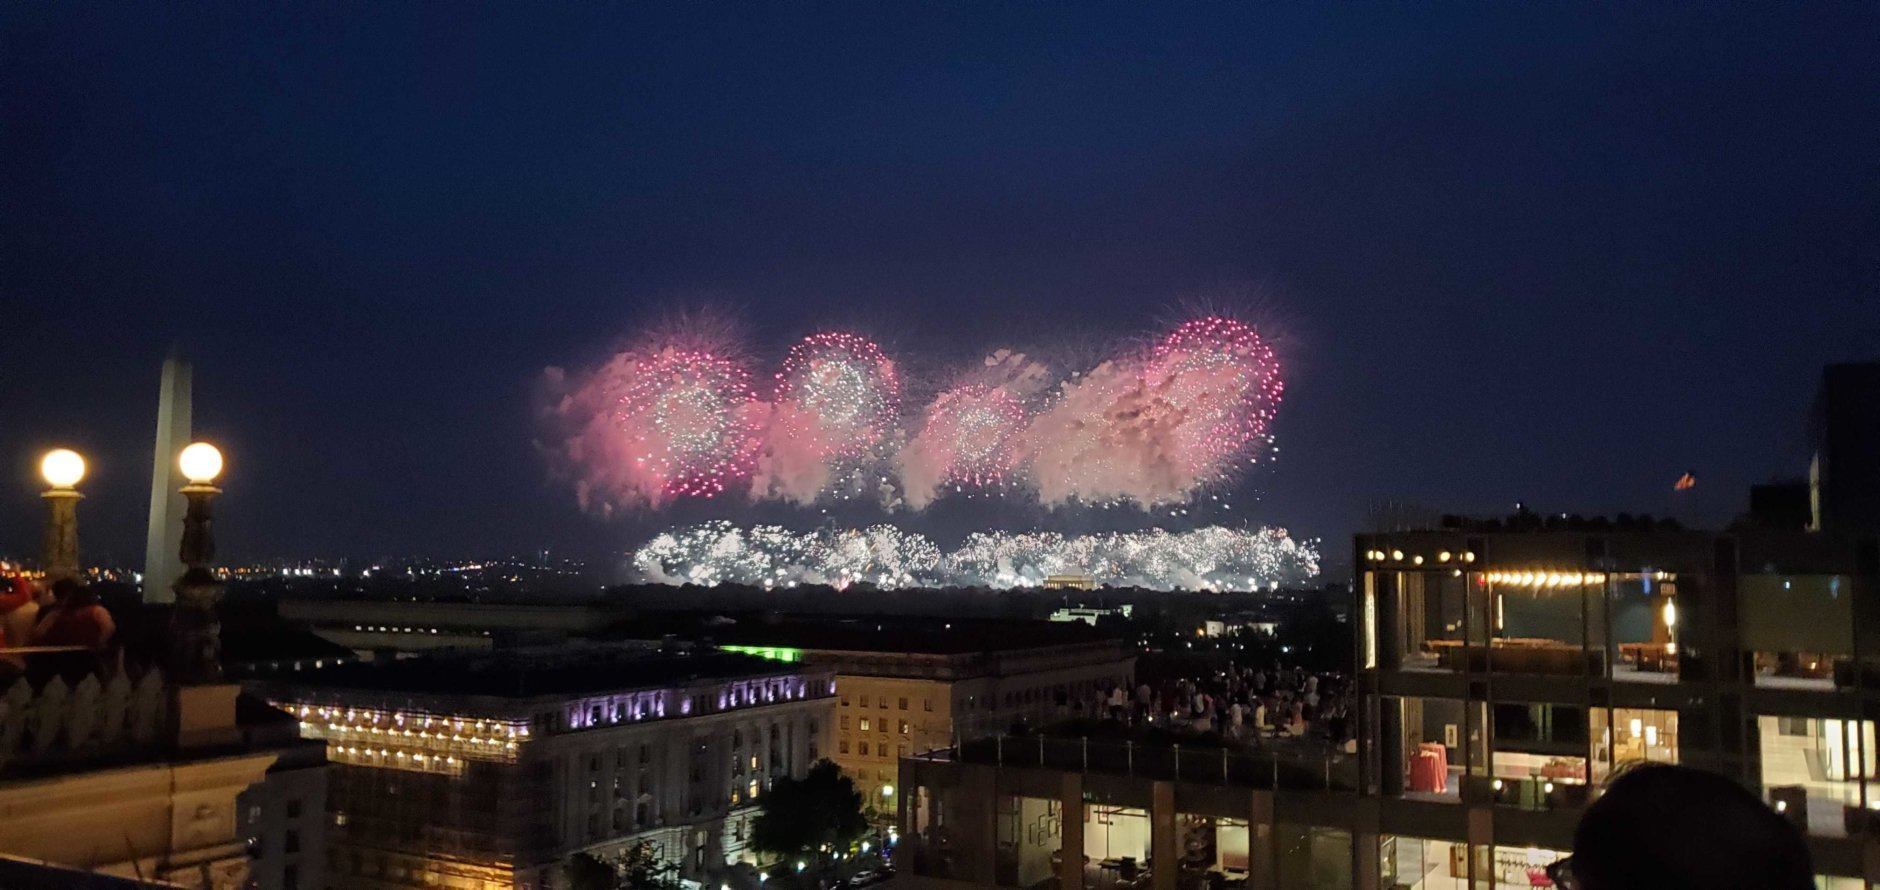 Fireworks lit the D.C. sky on July 4, 2019. (WTOP/Jared Ruderman)